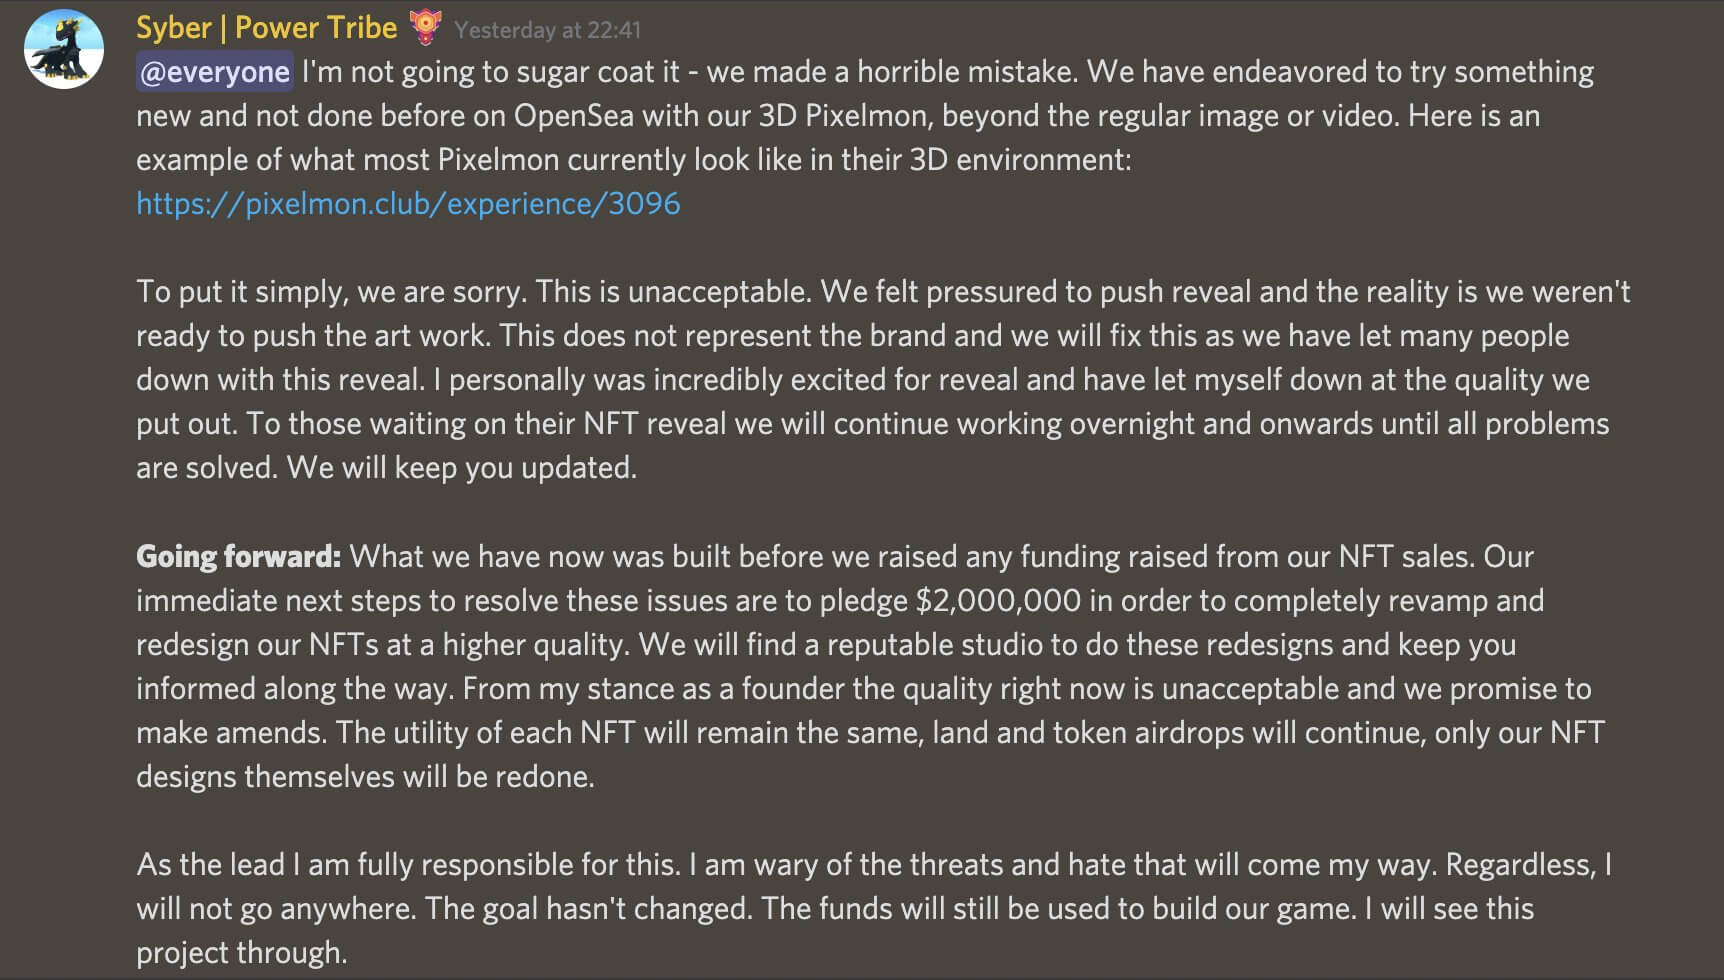 The Pixelmon team admits making “a horrible mistake.”